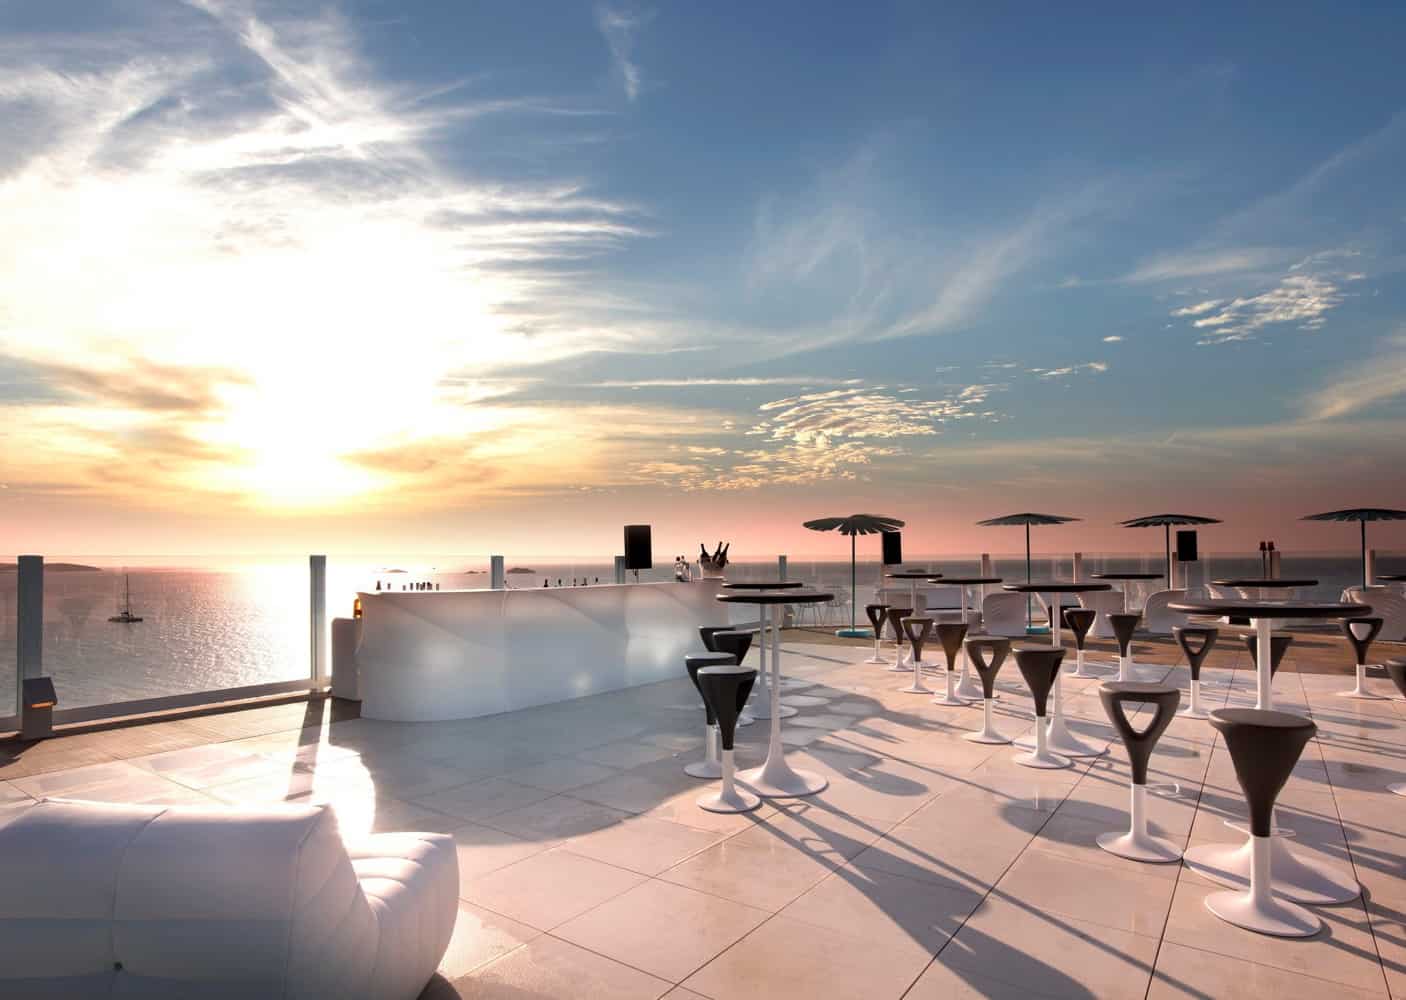 Daken op Ibiza: De meest indrukwekkende daken van Ibiza Magazine Ibiza